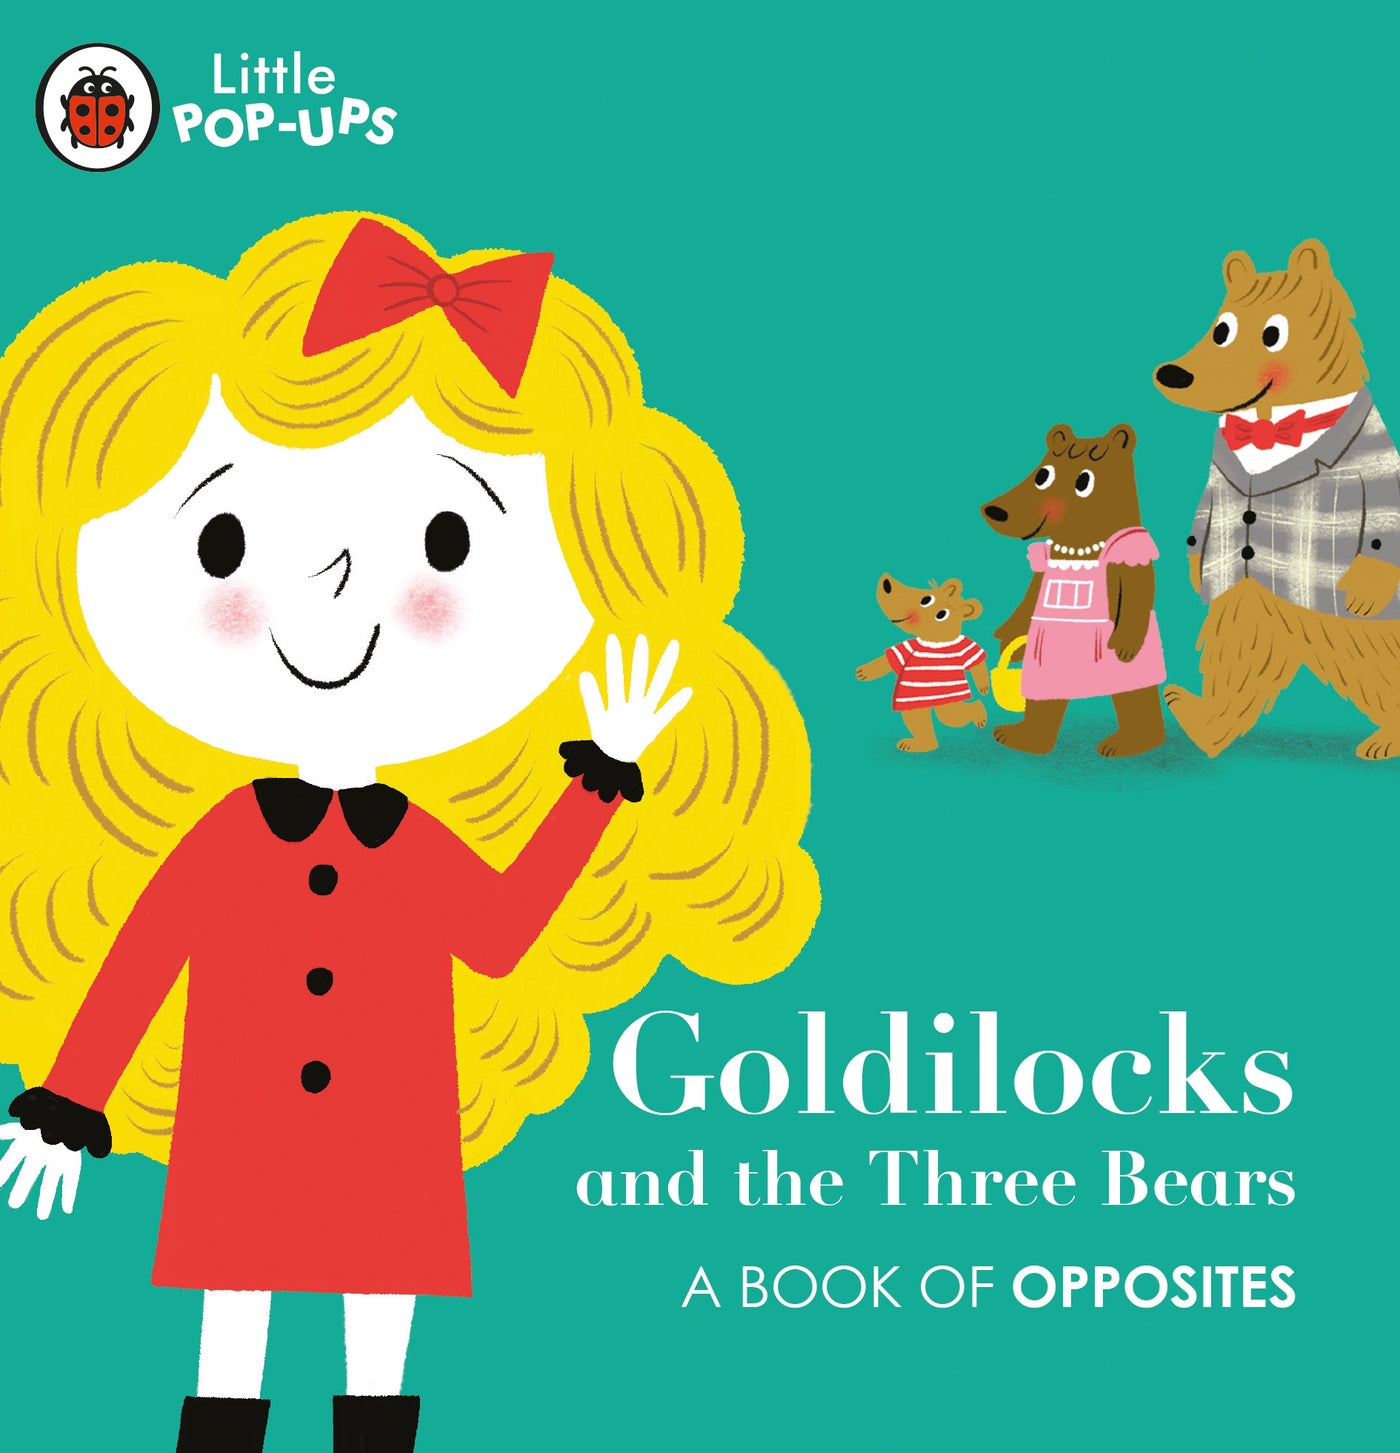 Little Pop-Ups: Goldilocks and the Three Bears